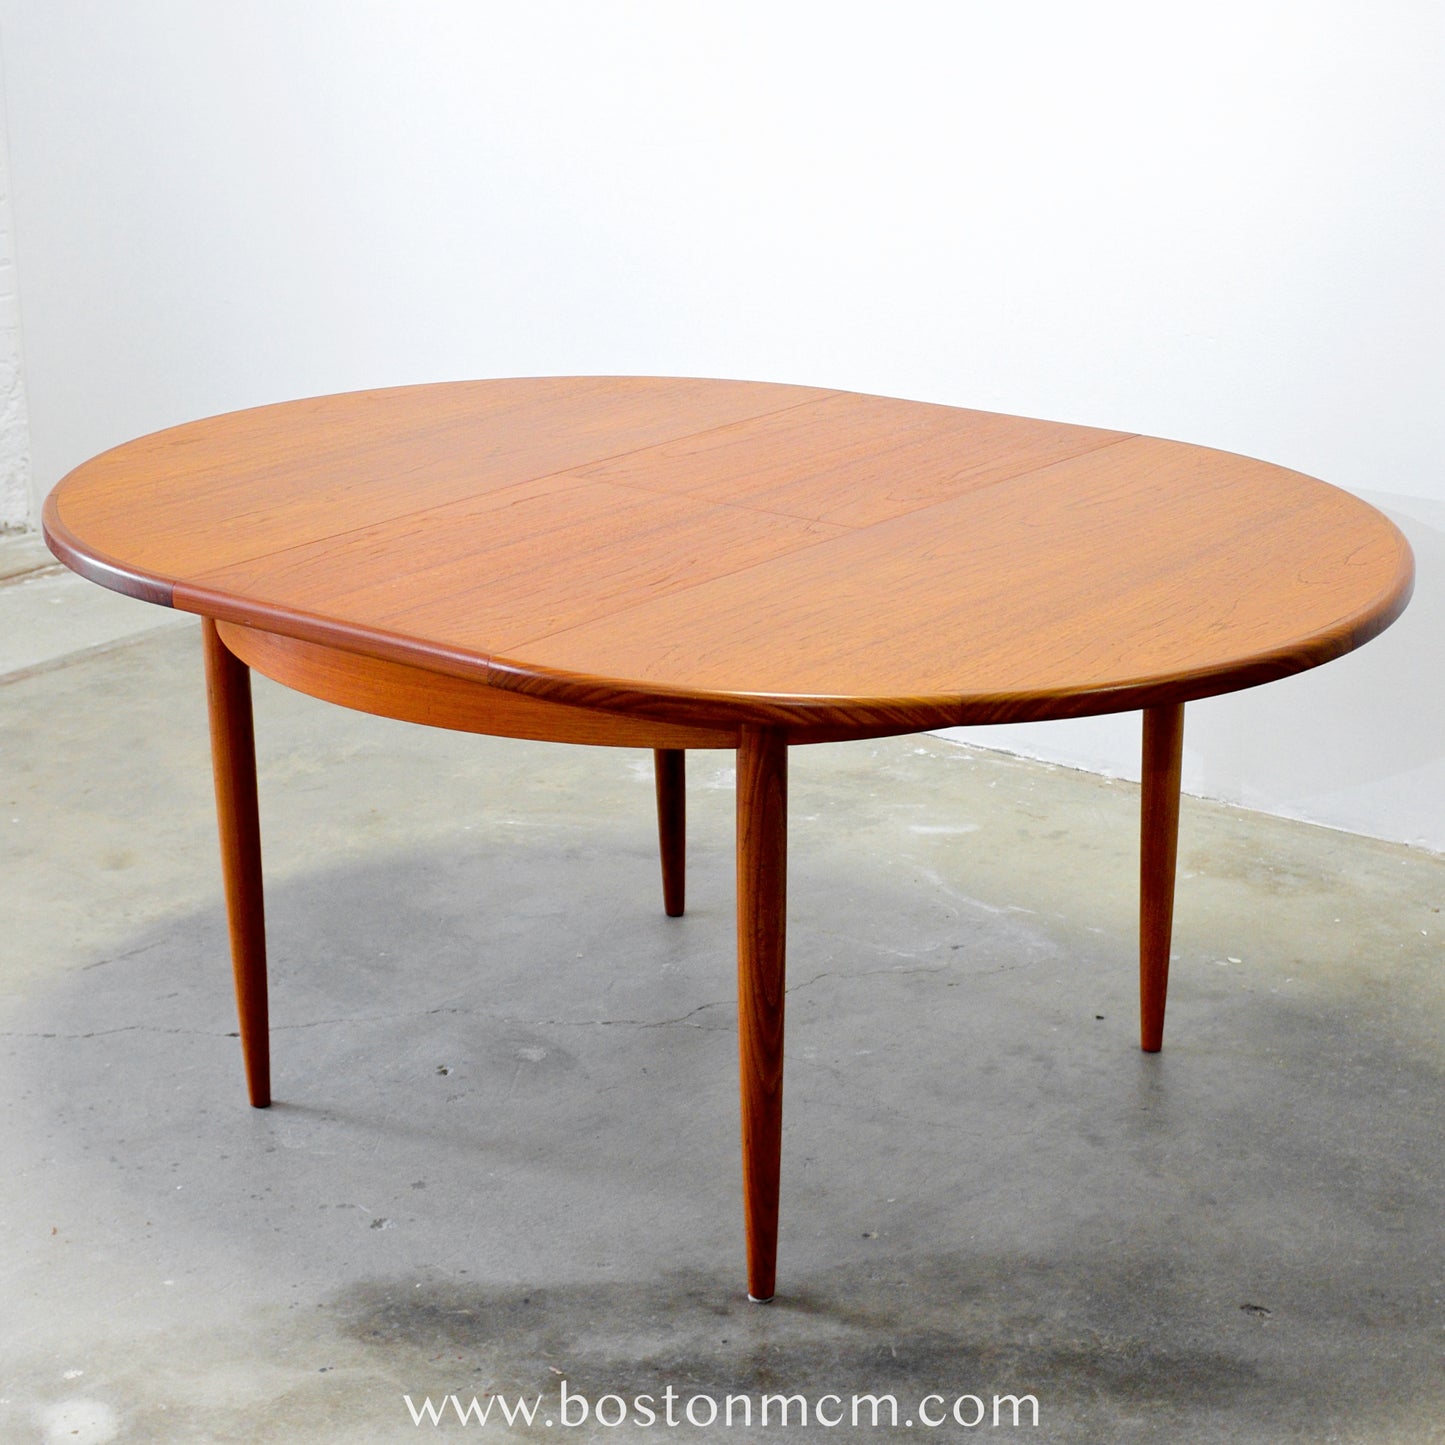 G-Plan Furniture Teak "Fresco" Round Dining Table Designed by V. B. Wilkins